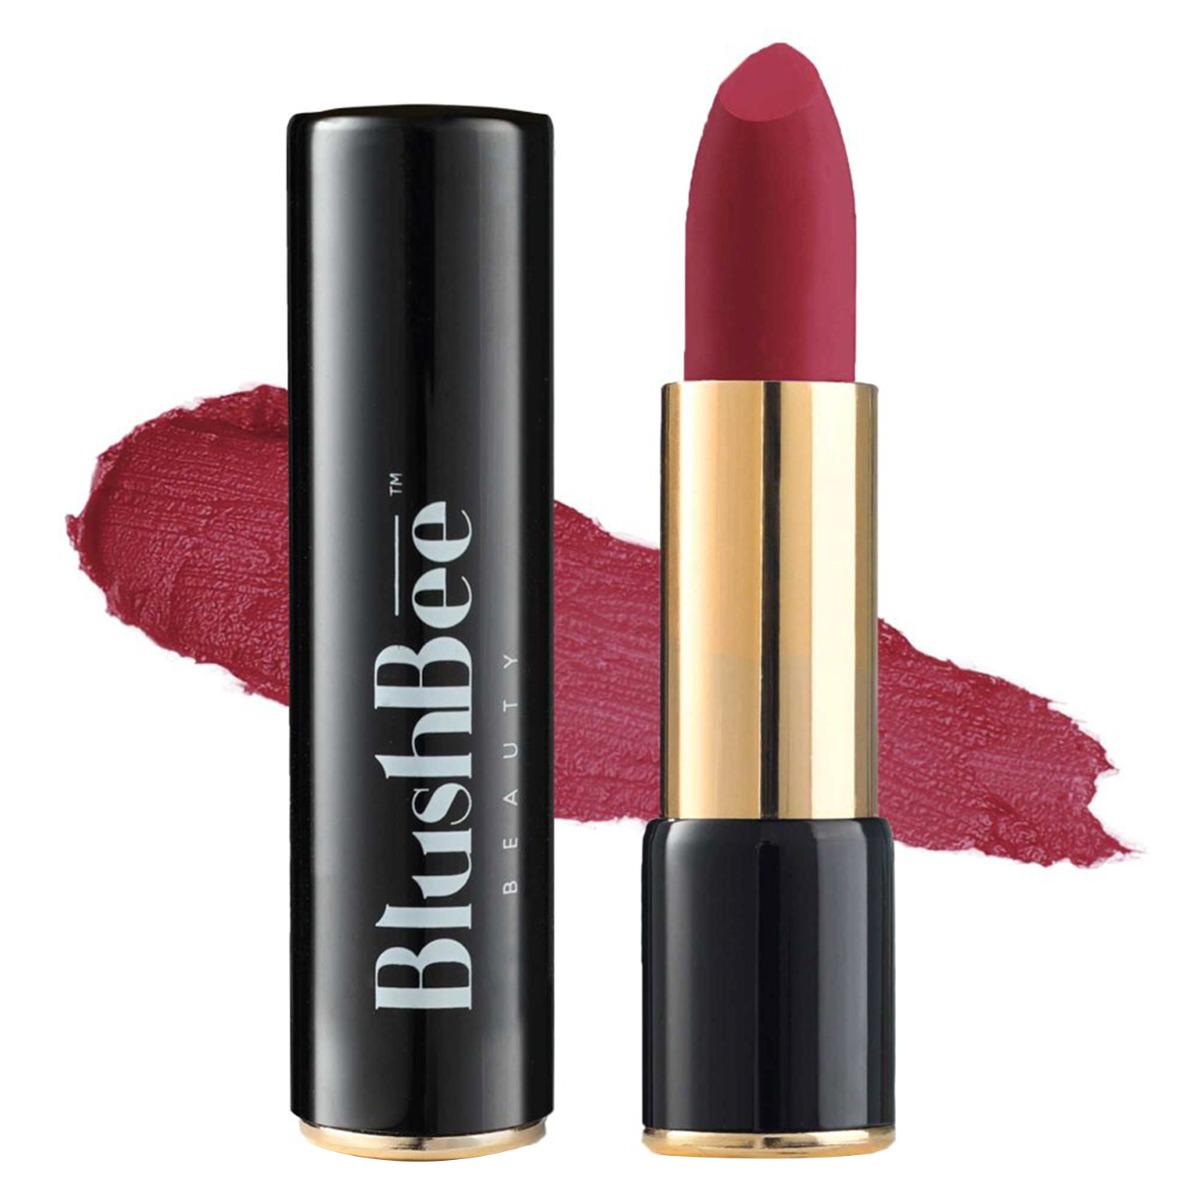 BlushBee Organic Beauty Lip Nourishing Organic Vegan Lipstick, 4.2gm